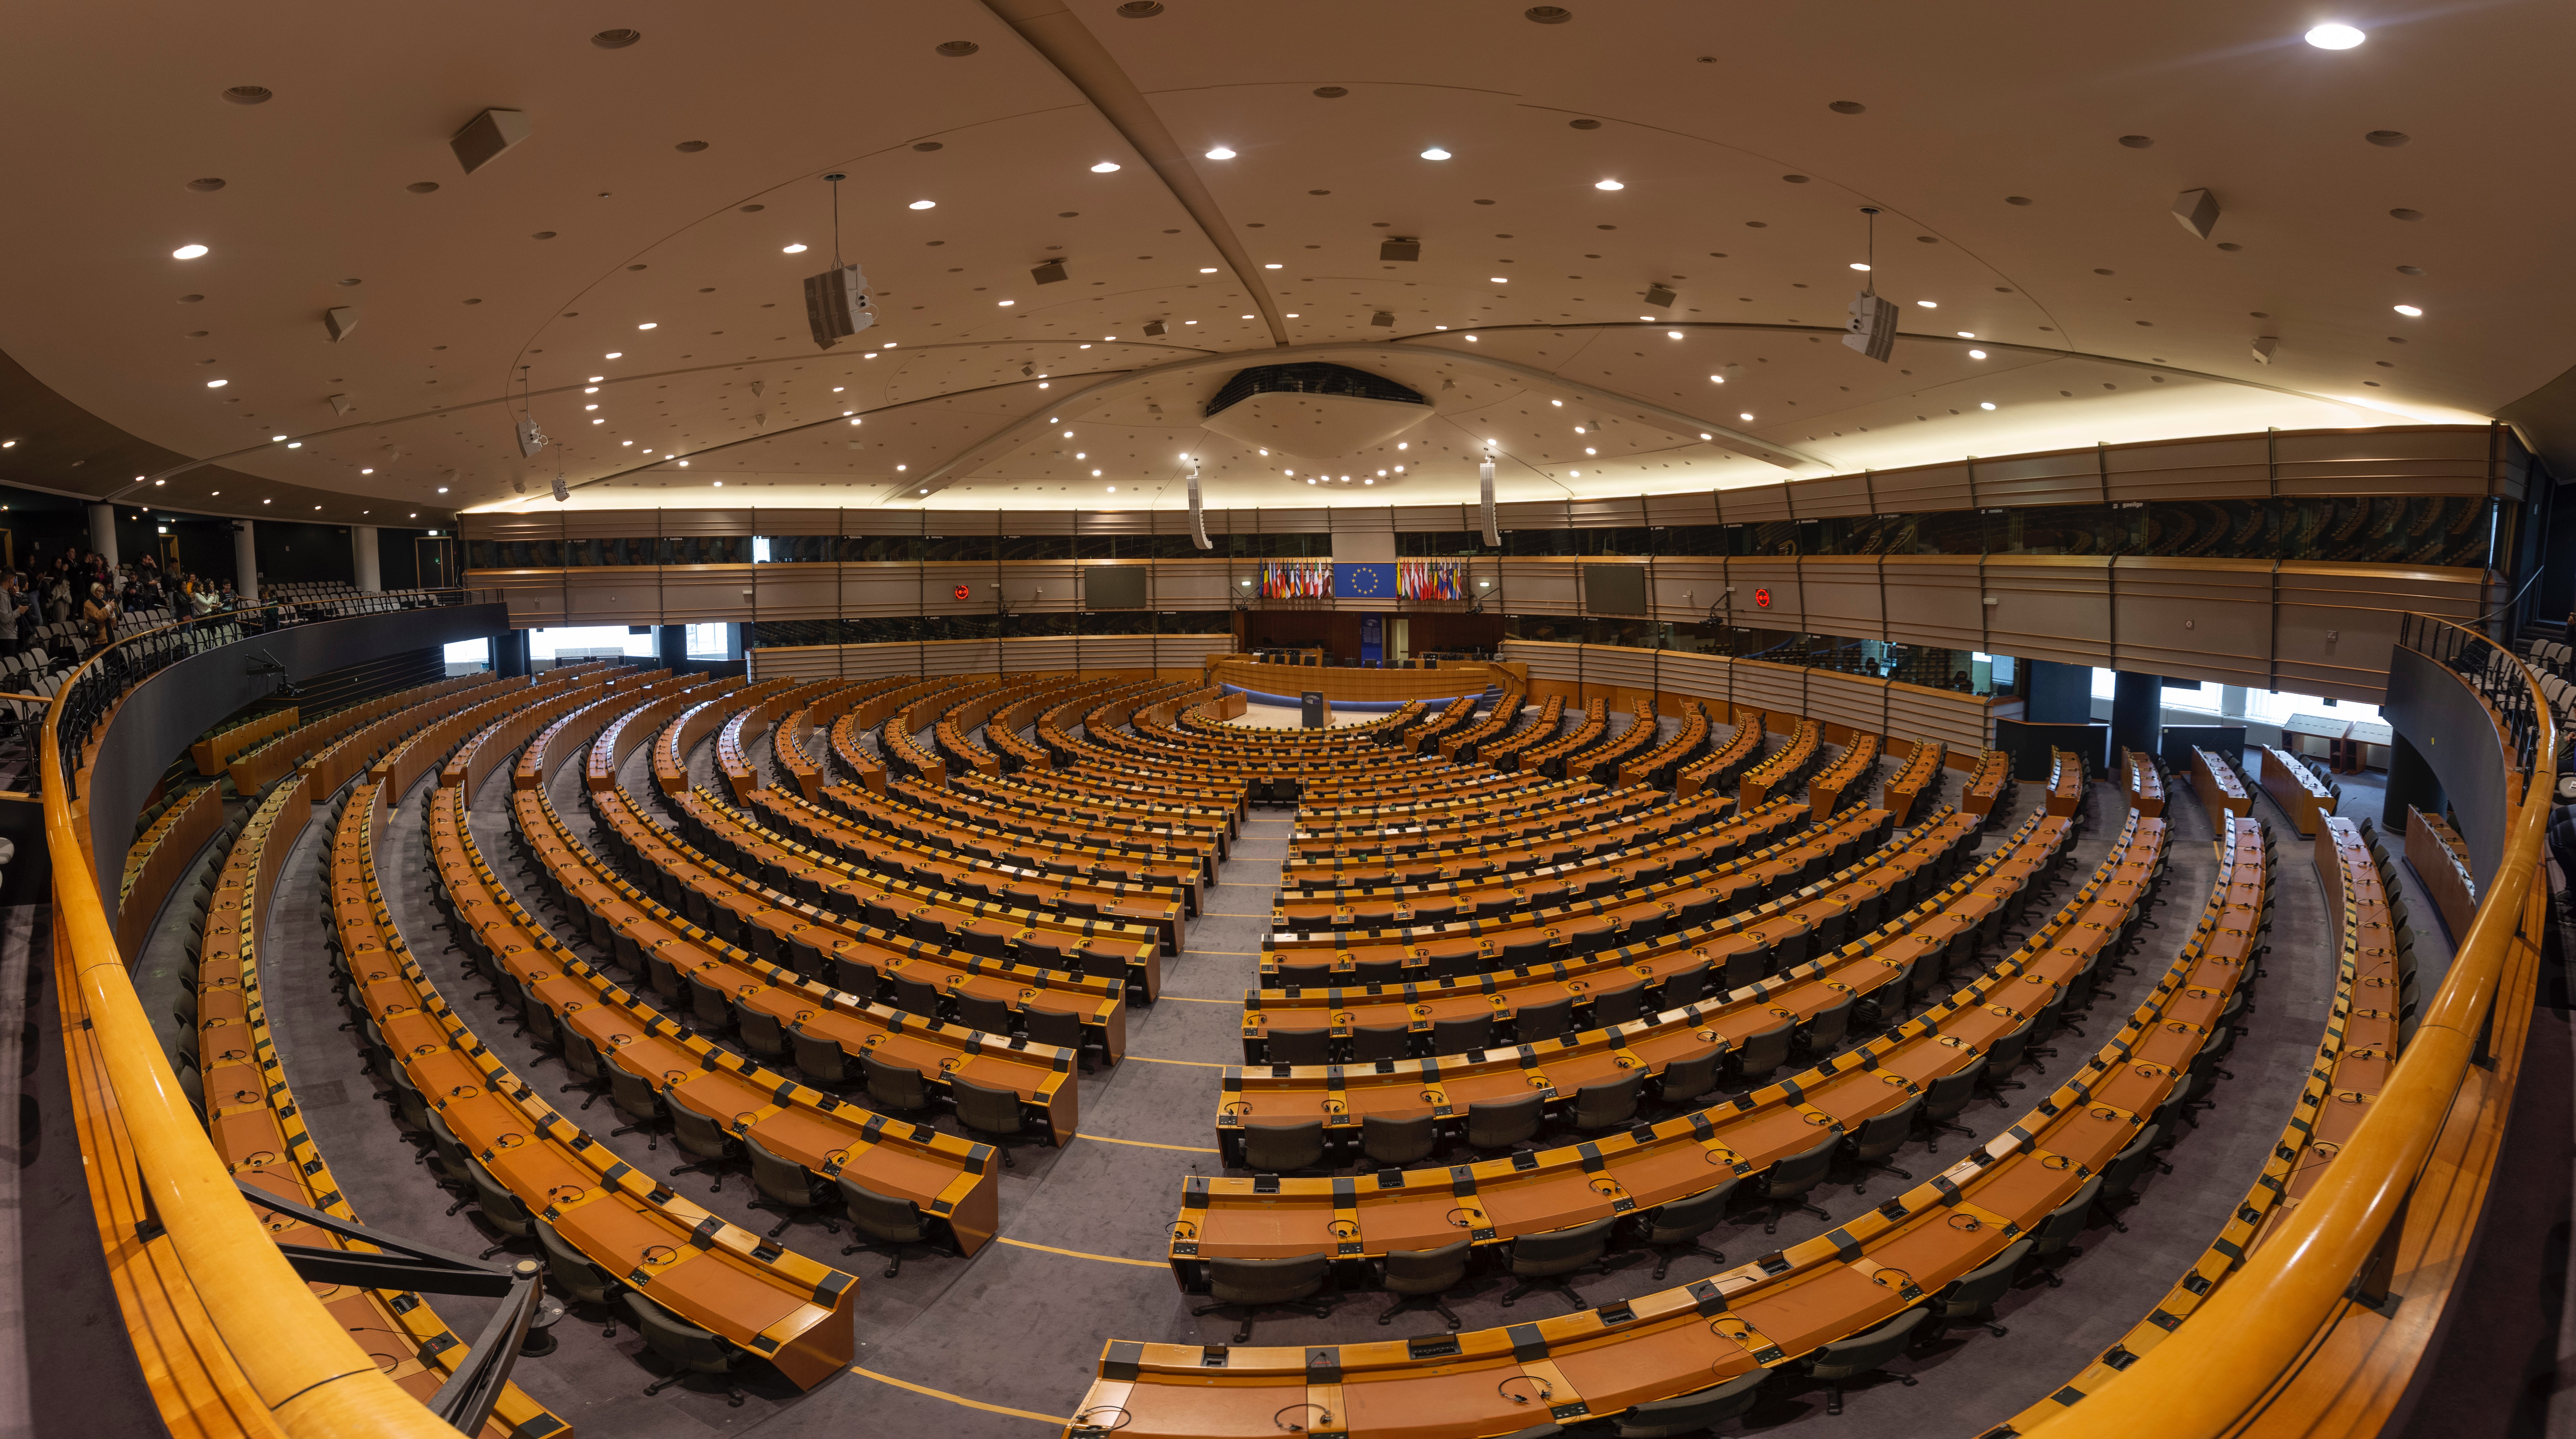 EU Parliament image by Marius Oprea on Unsplash